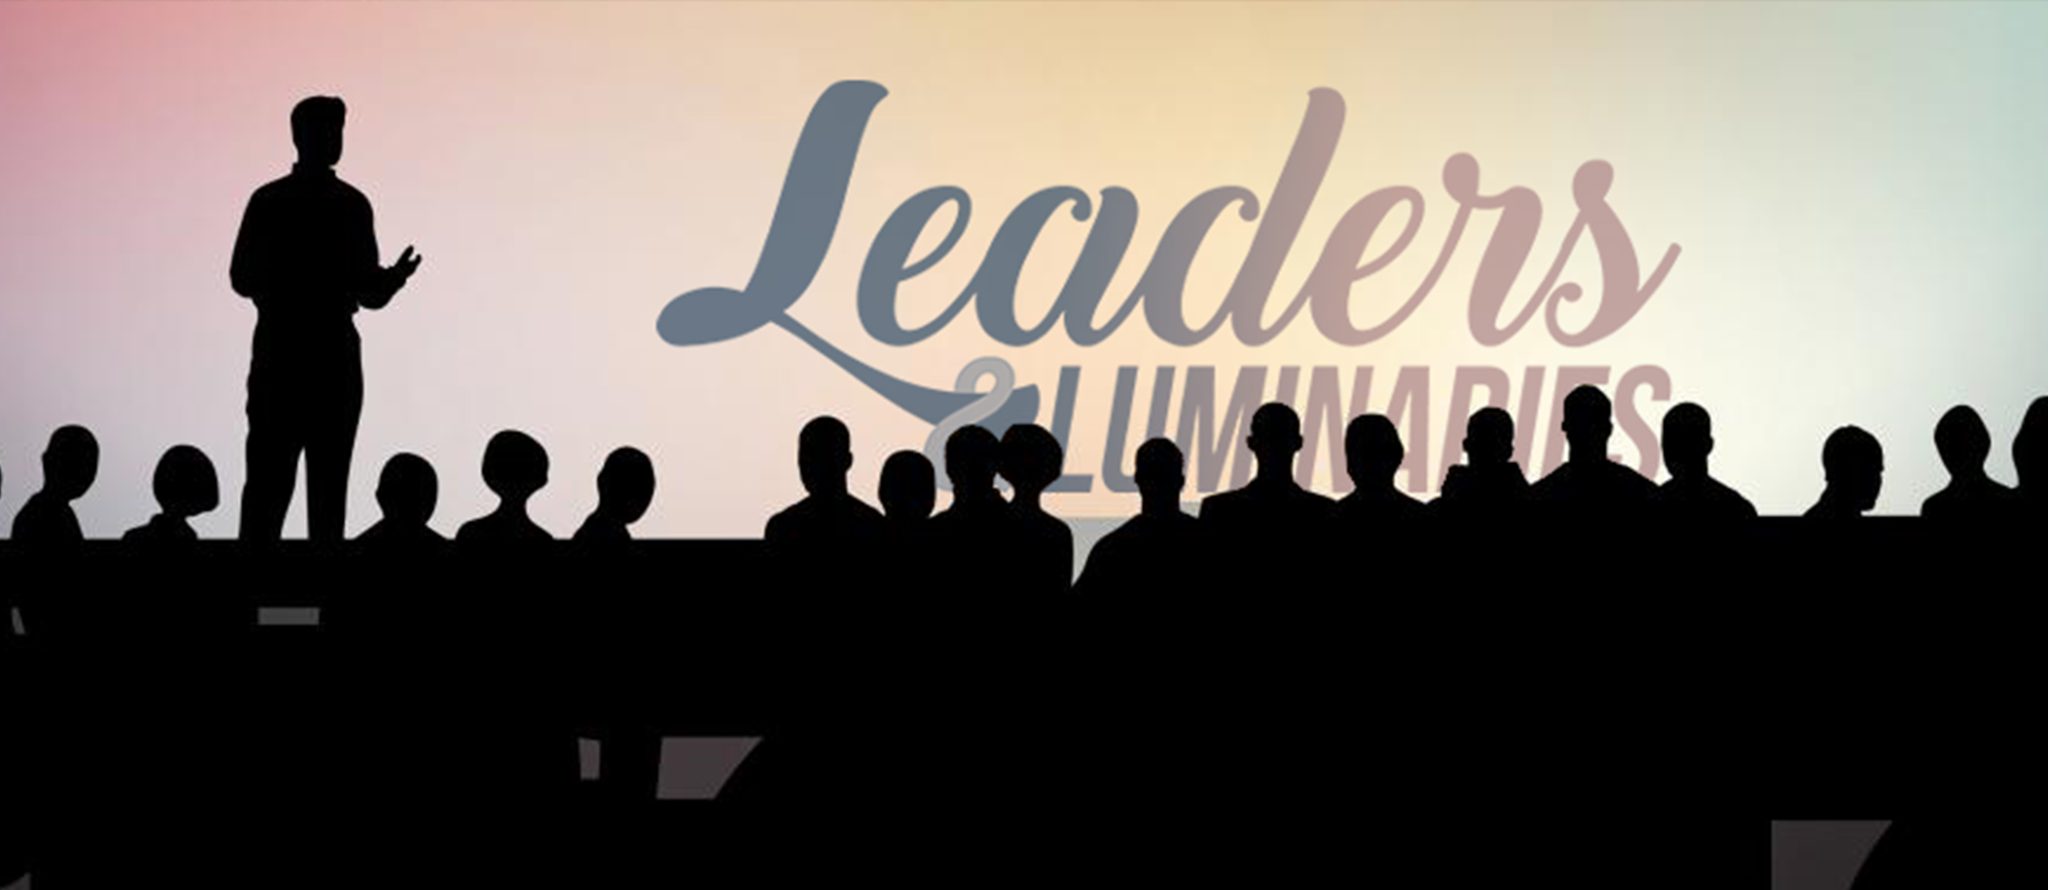 Leaders and Luminaries